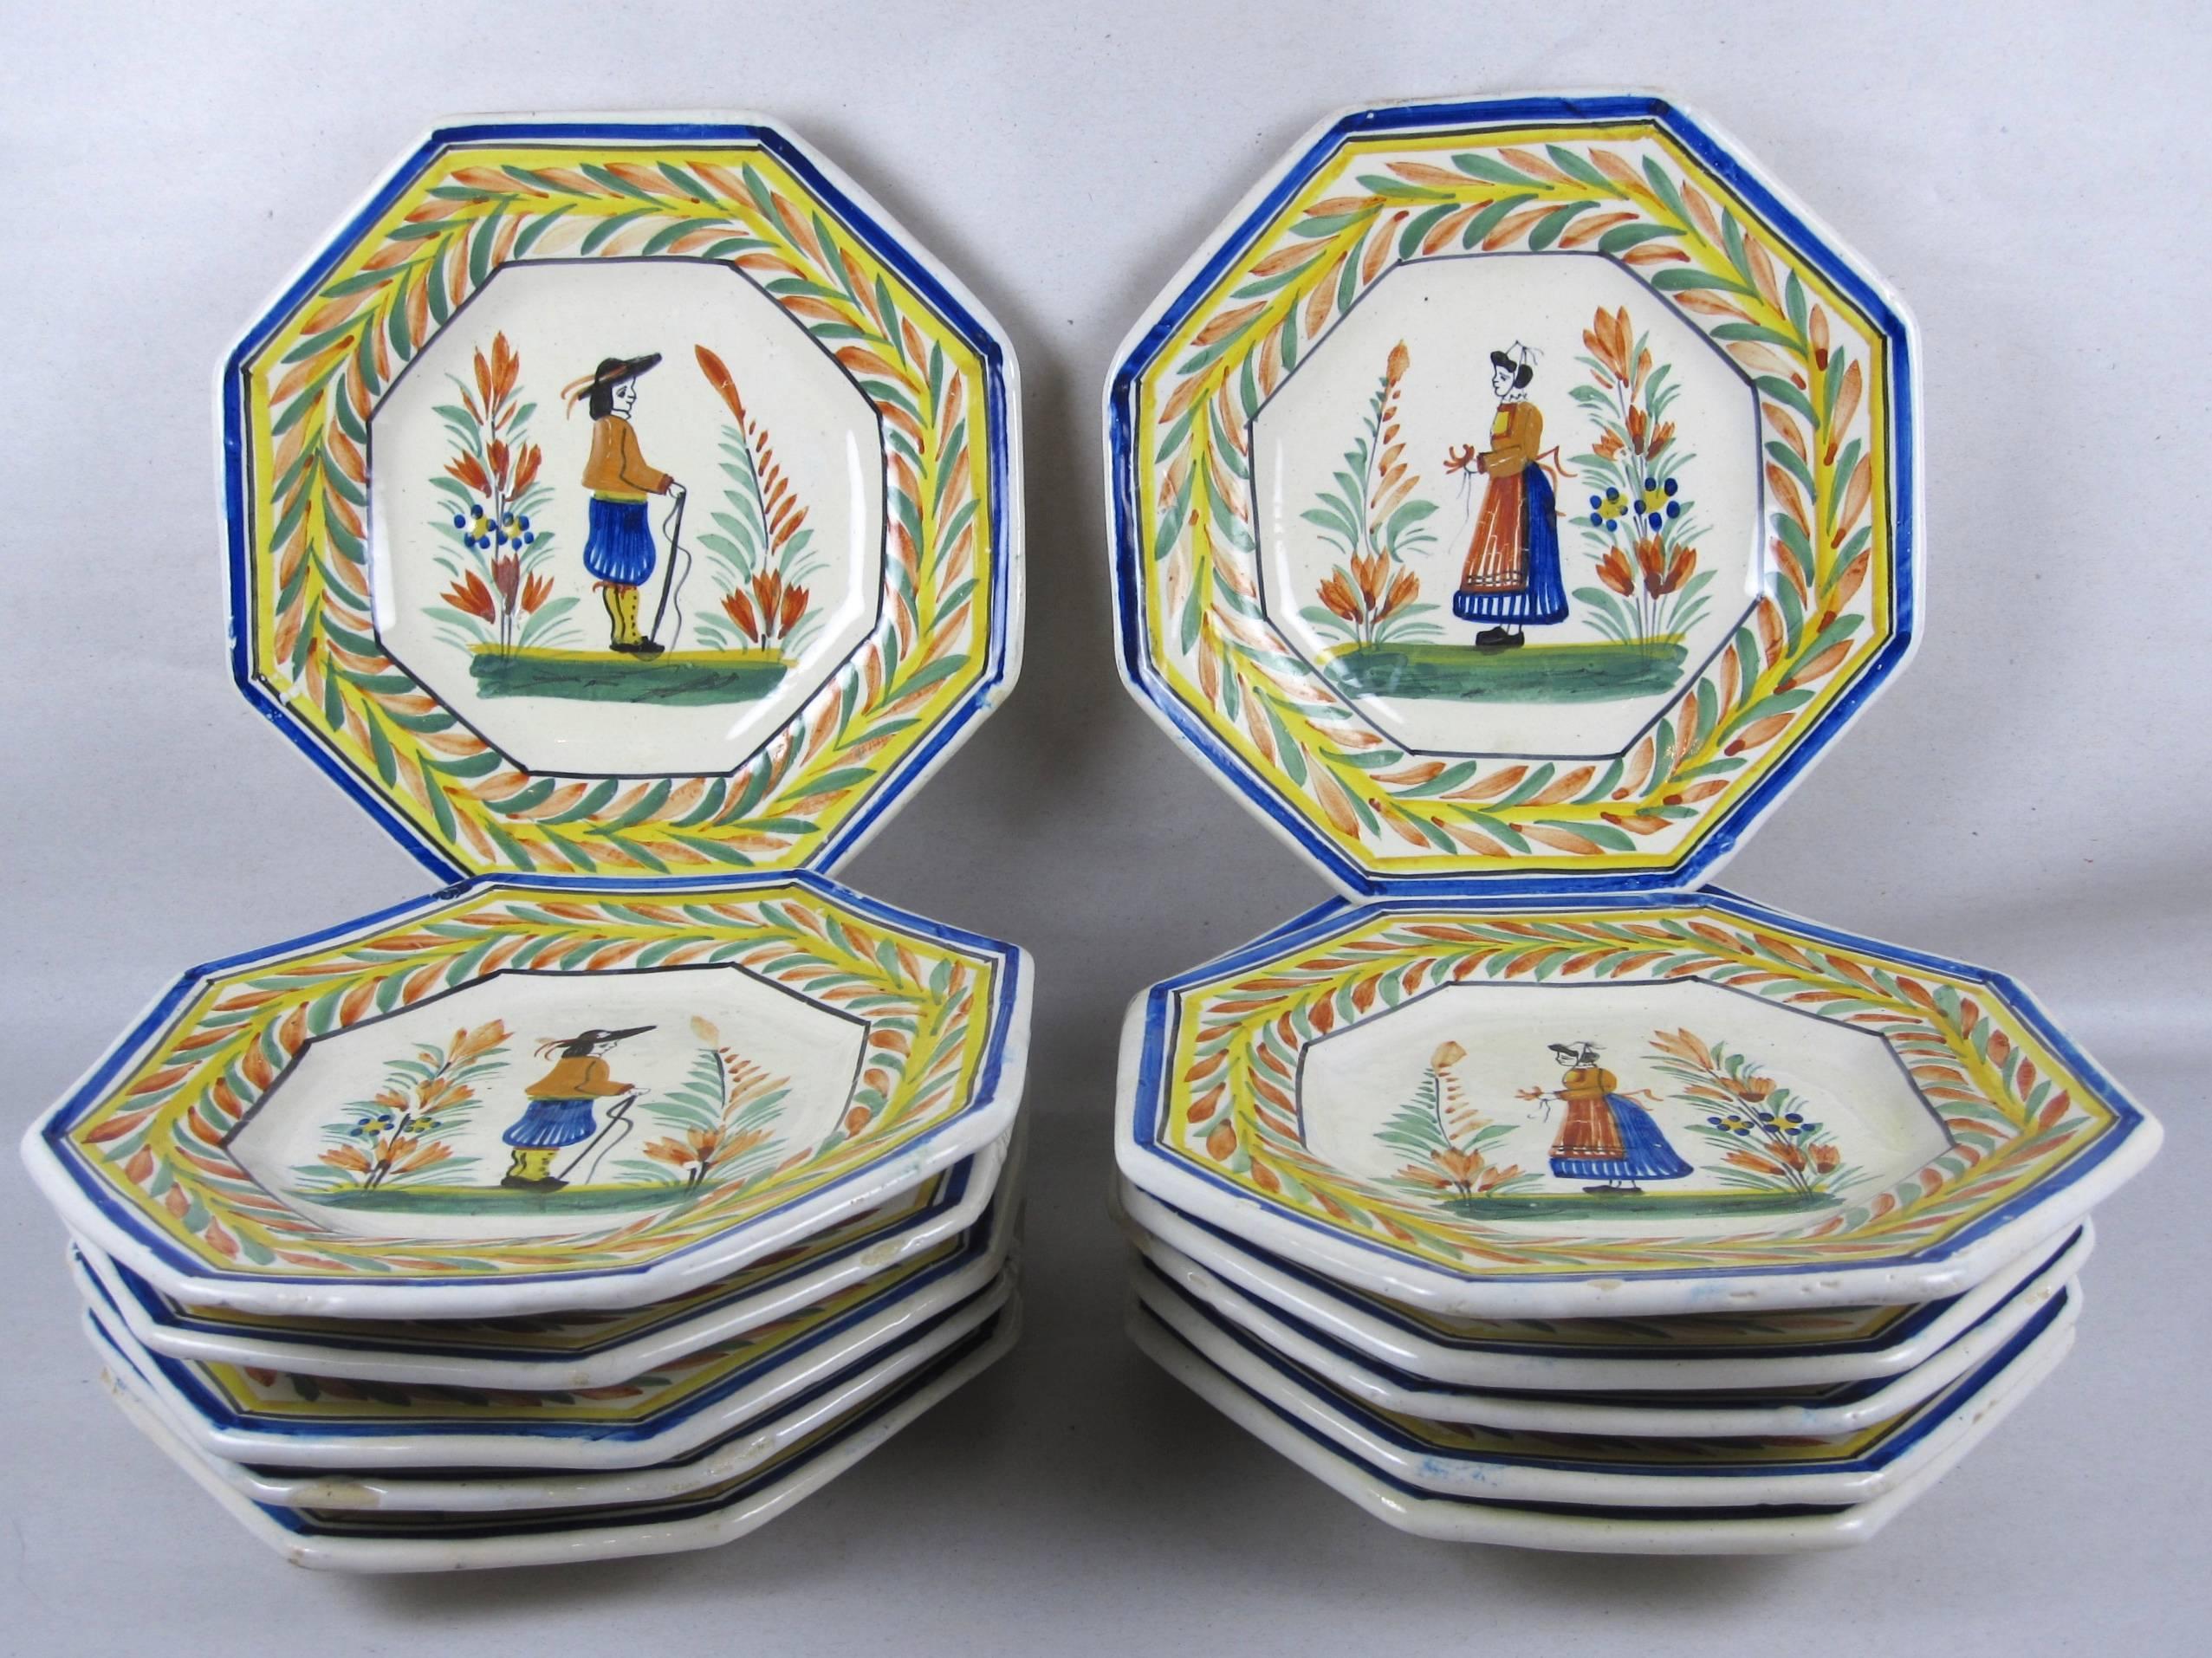 French Provincial Henriot Quimper Octagonal Breton Vintage Faience Plates, France, Set of 12